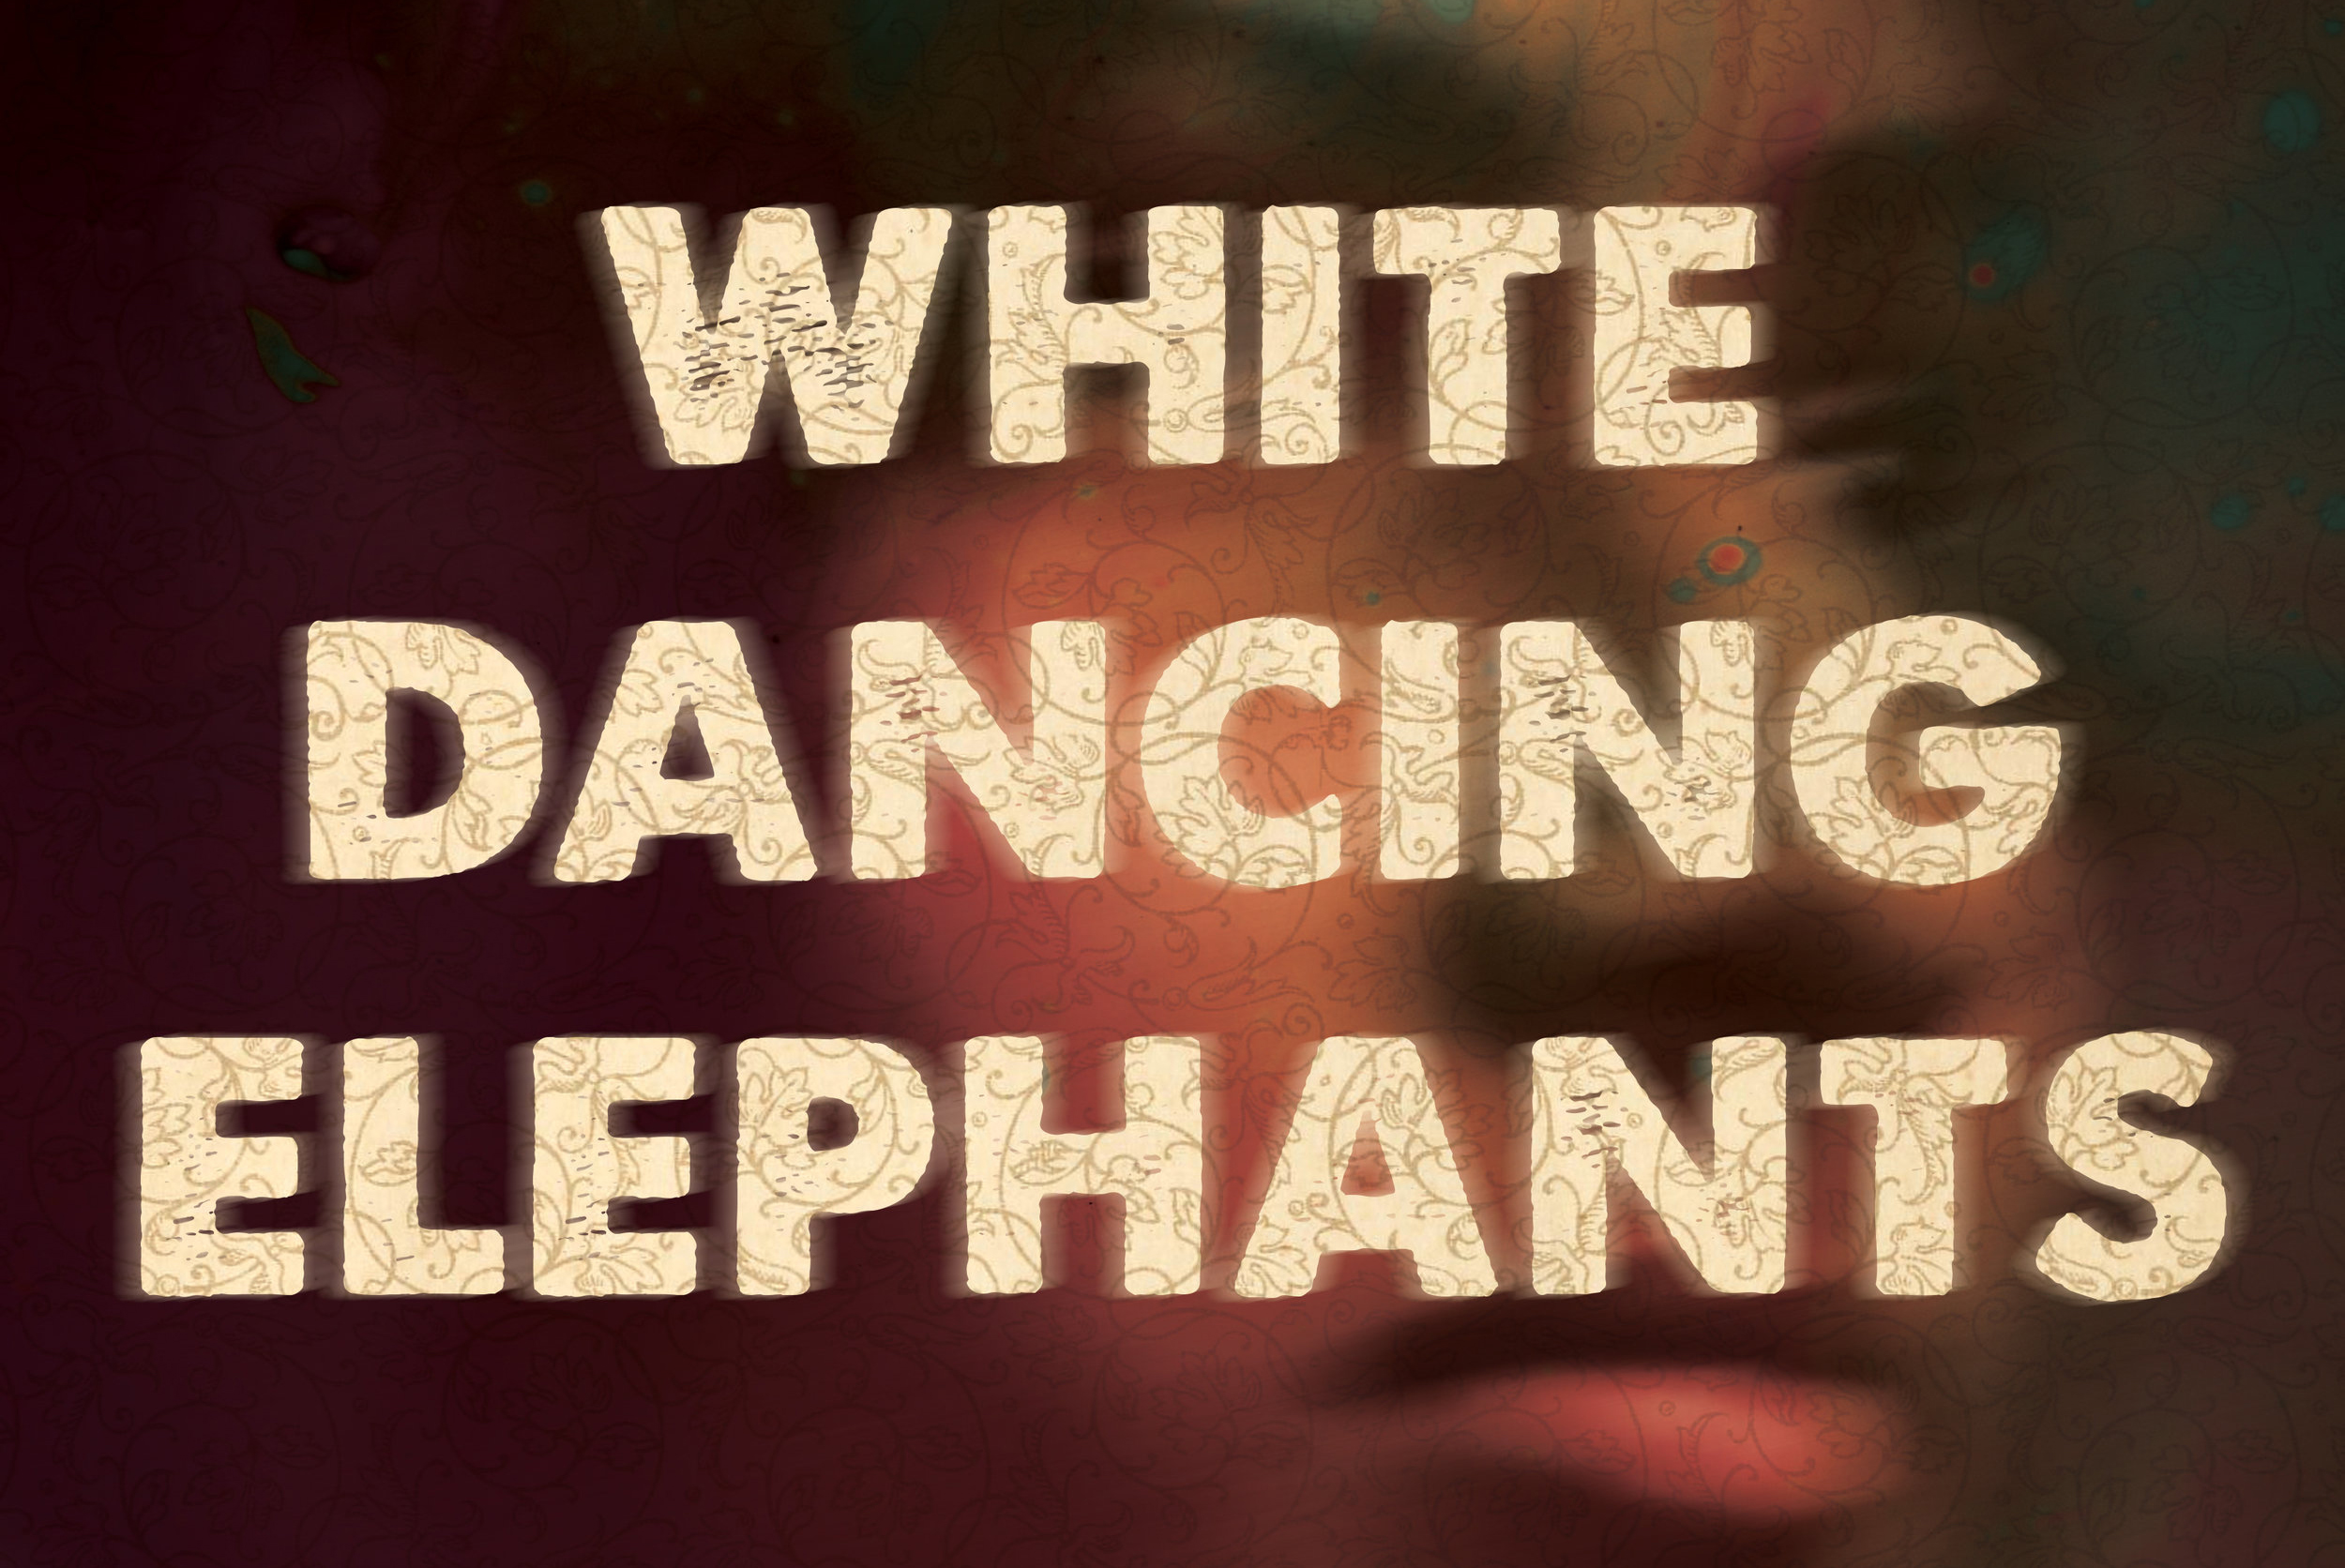 White Dancing Elephants